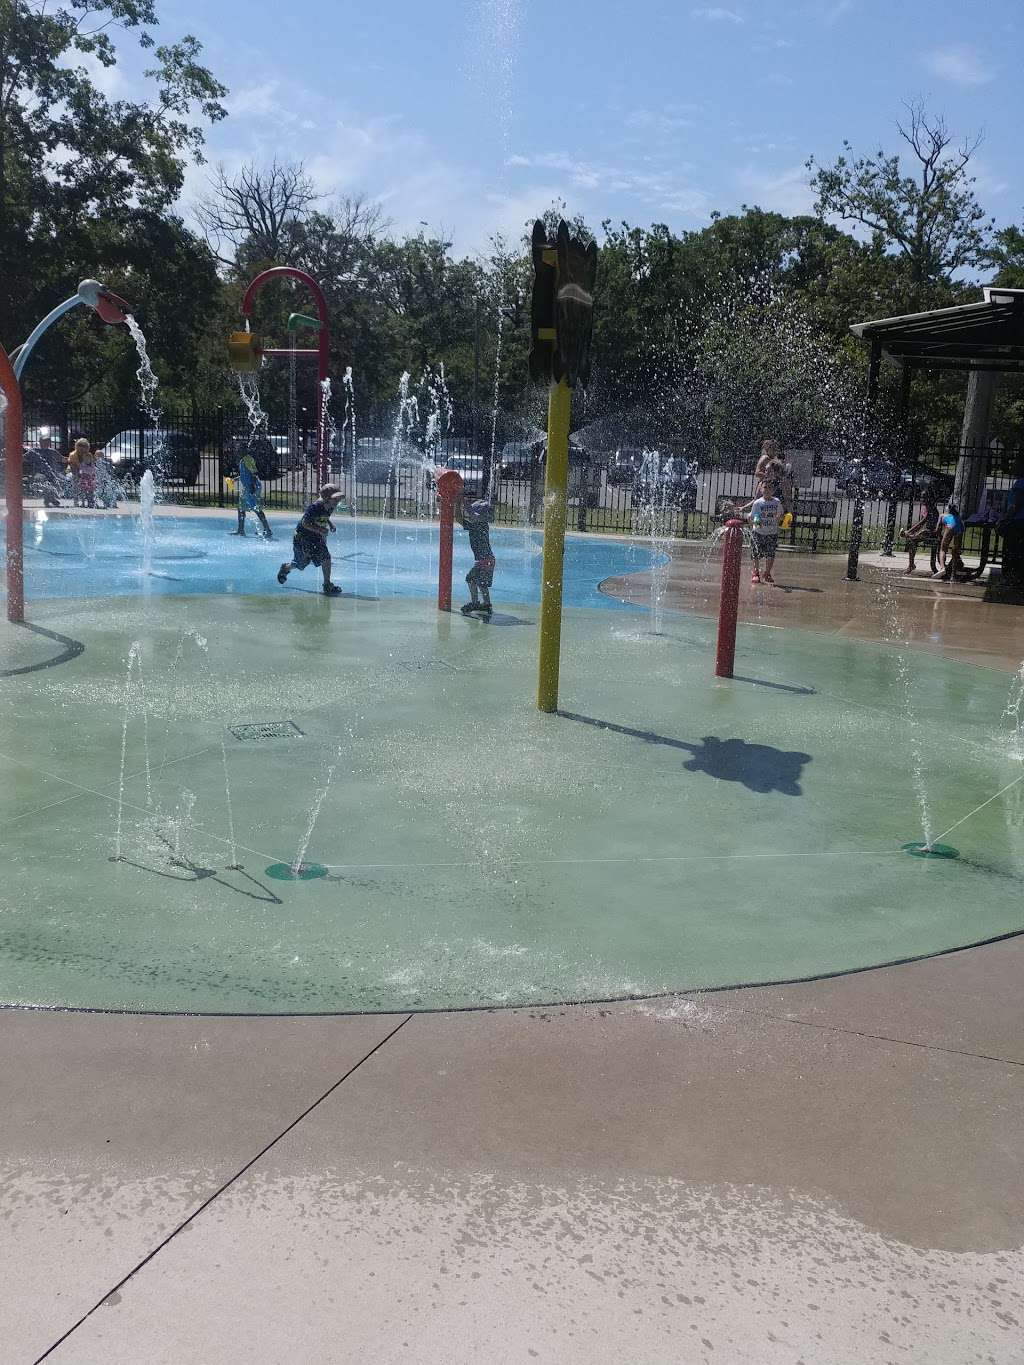 Bridgeton splash park | 25 Mayor Aitken Dr, Bridgeton, NJ 08302, USA | Phone: (856) 453-1675